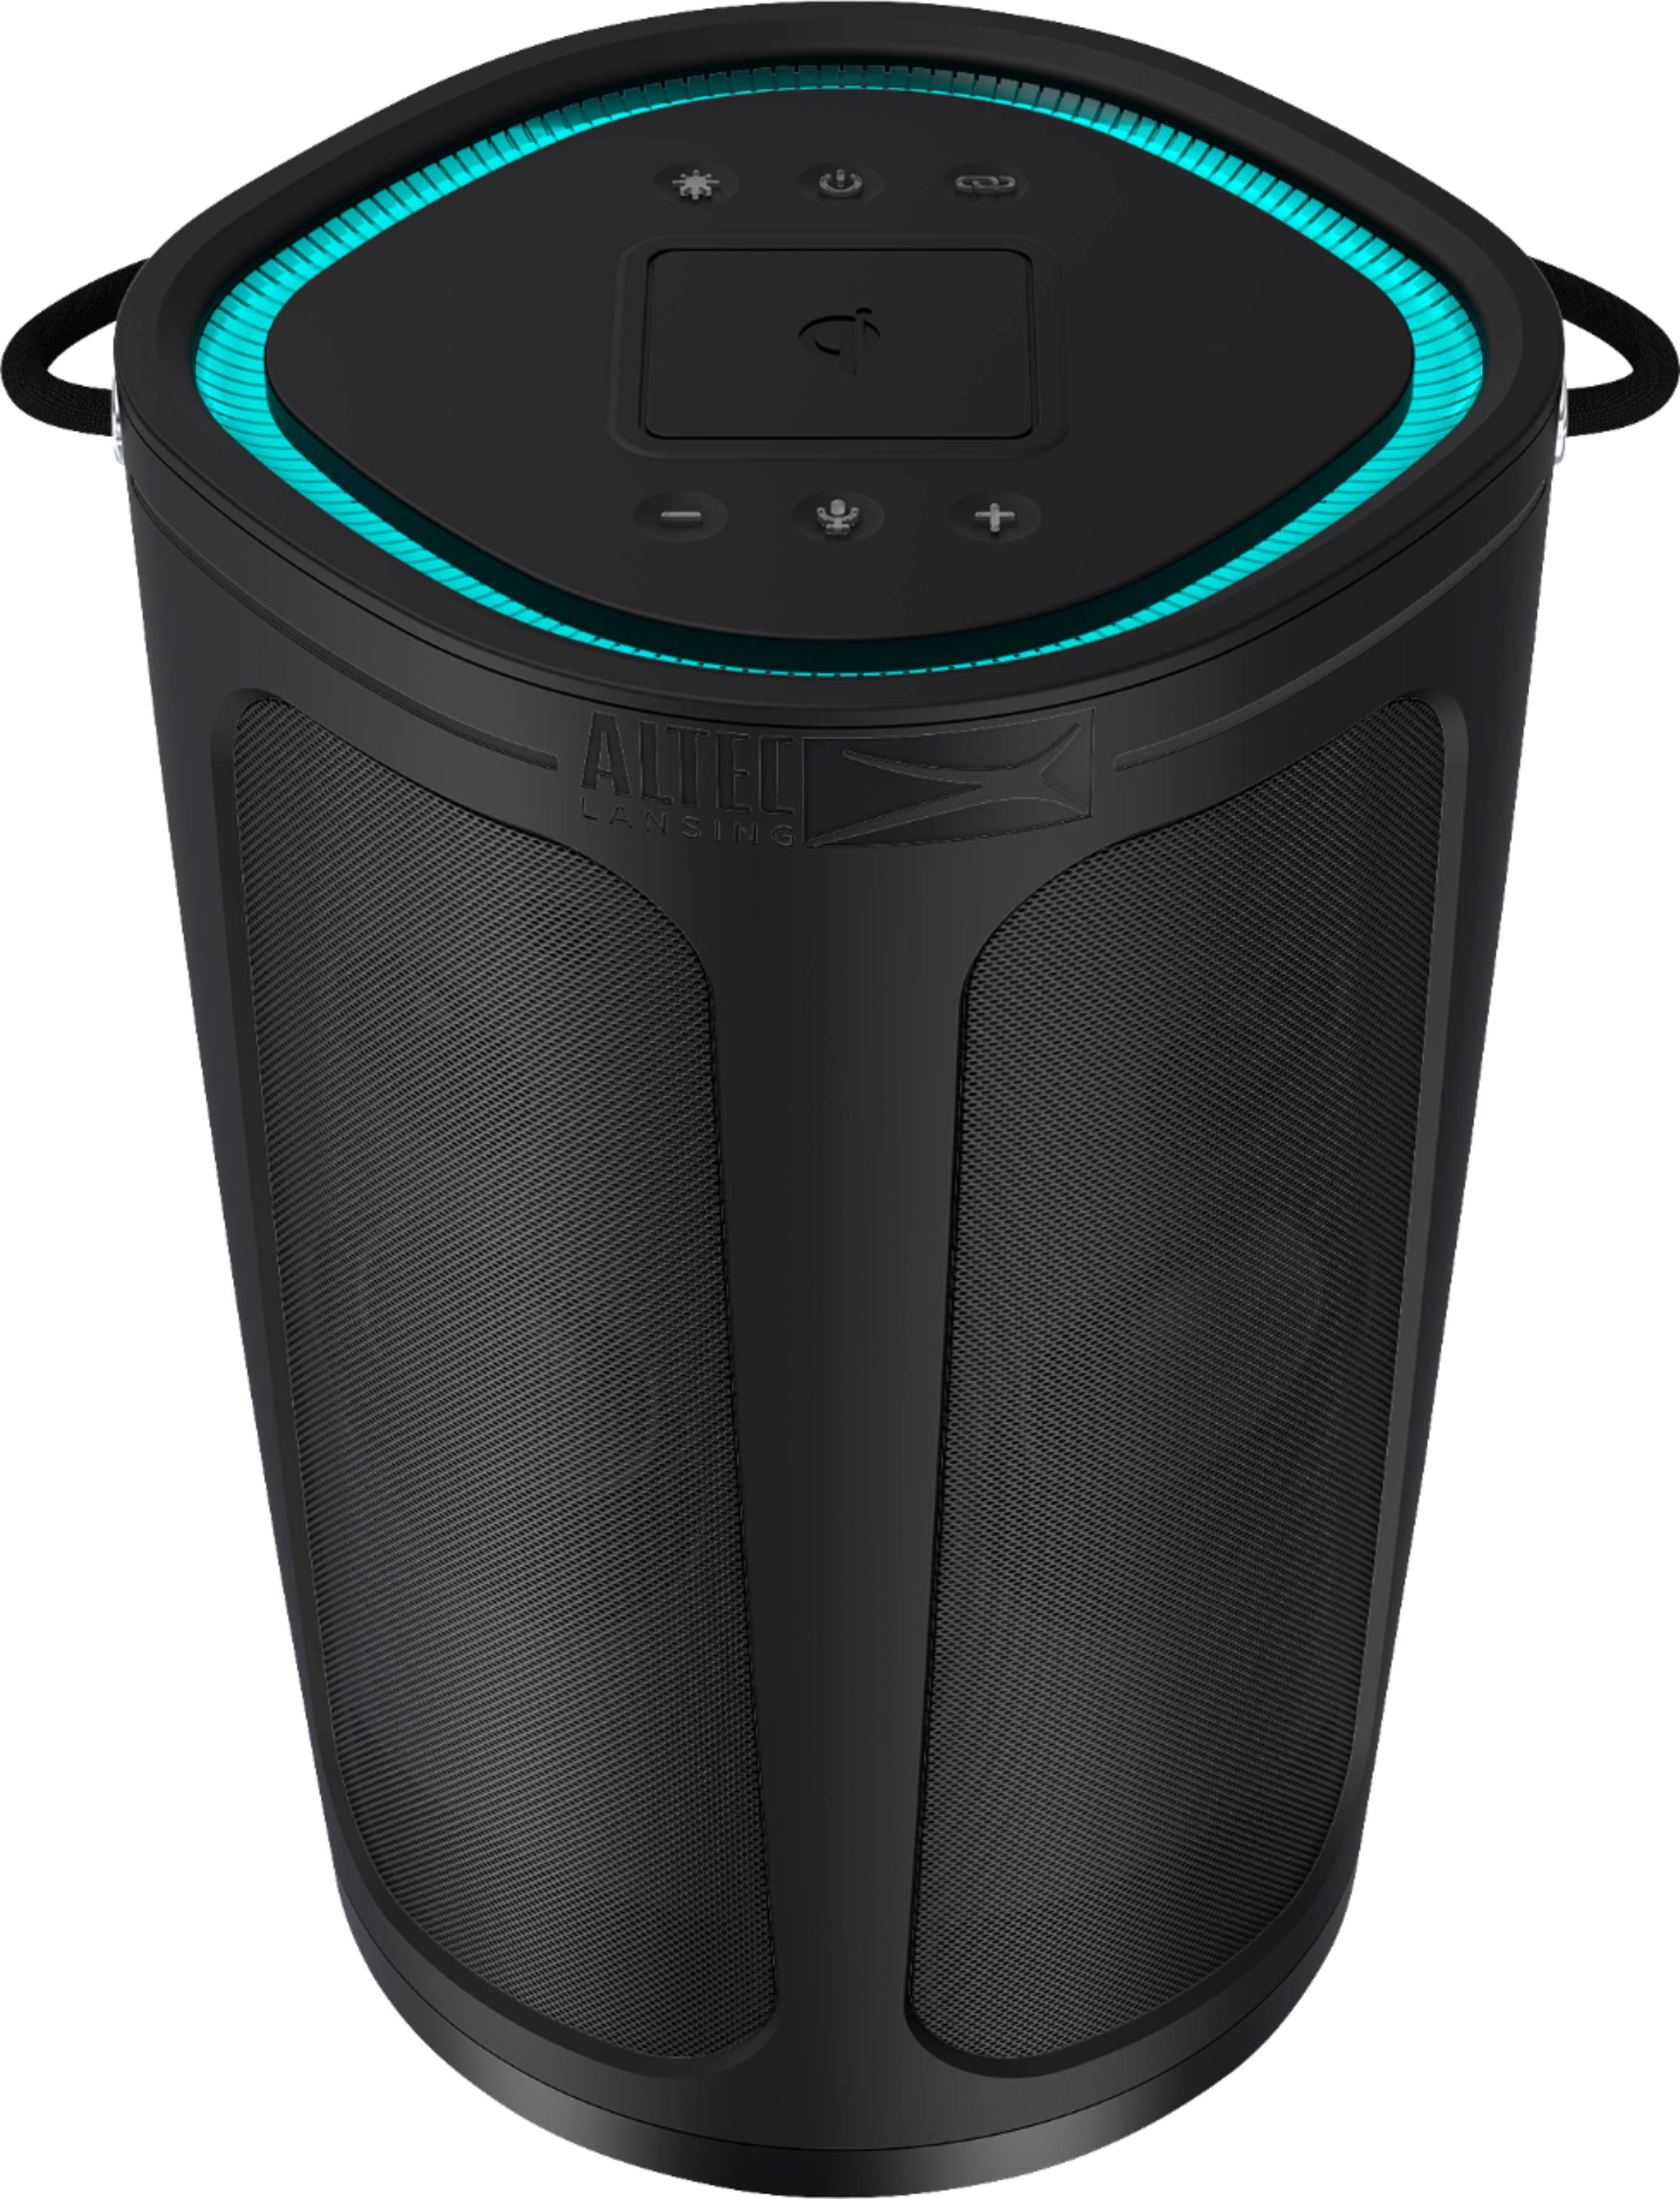 Altec Lansing SoundBucket XL Portable Bluetooth - Best Buy